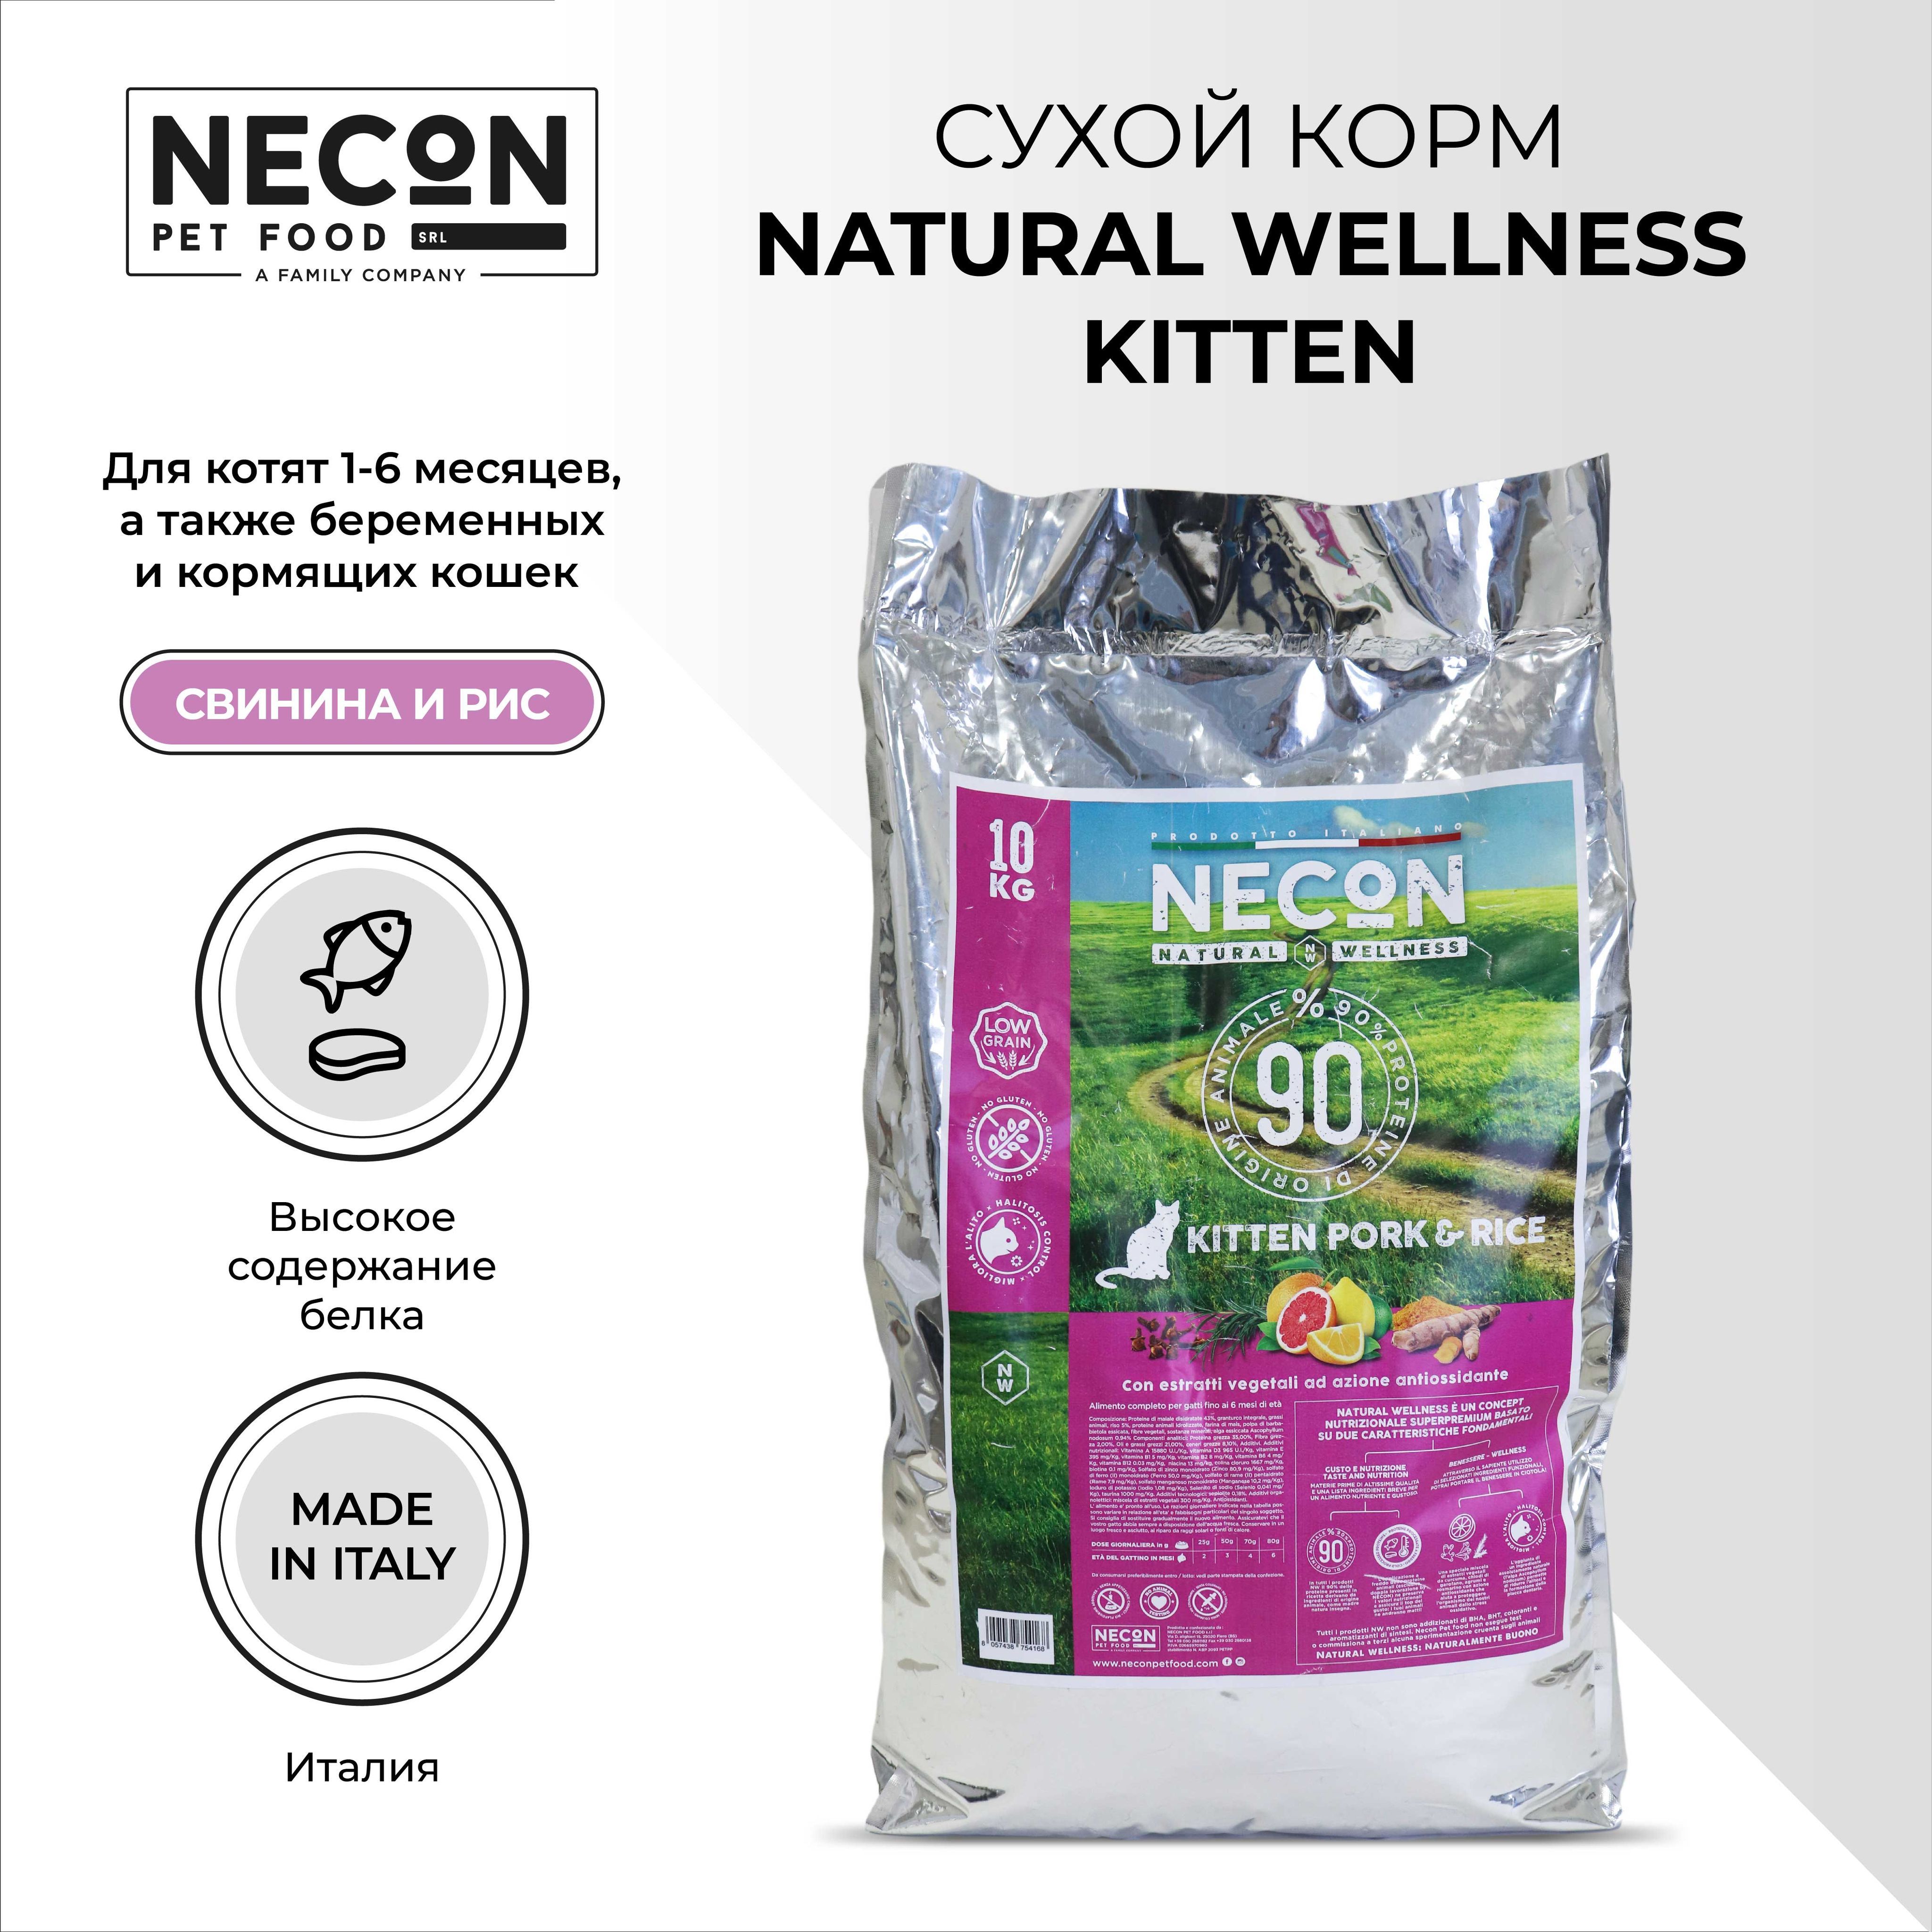 фото Сухой корм для котят necon natural wellness kitten, свинина и рис 10 кг